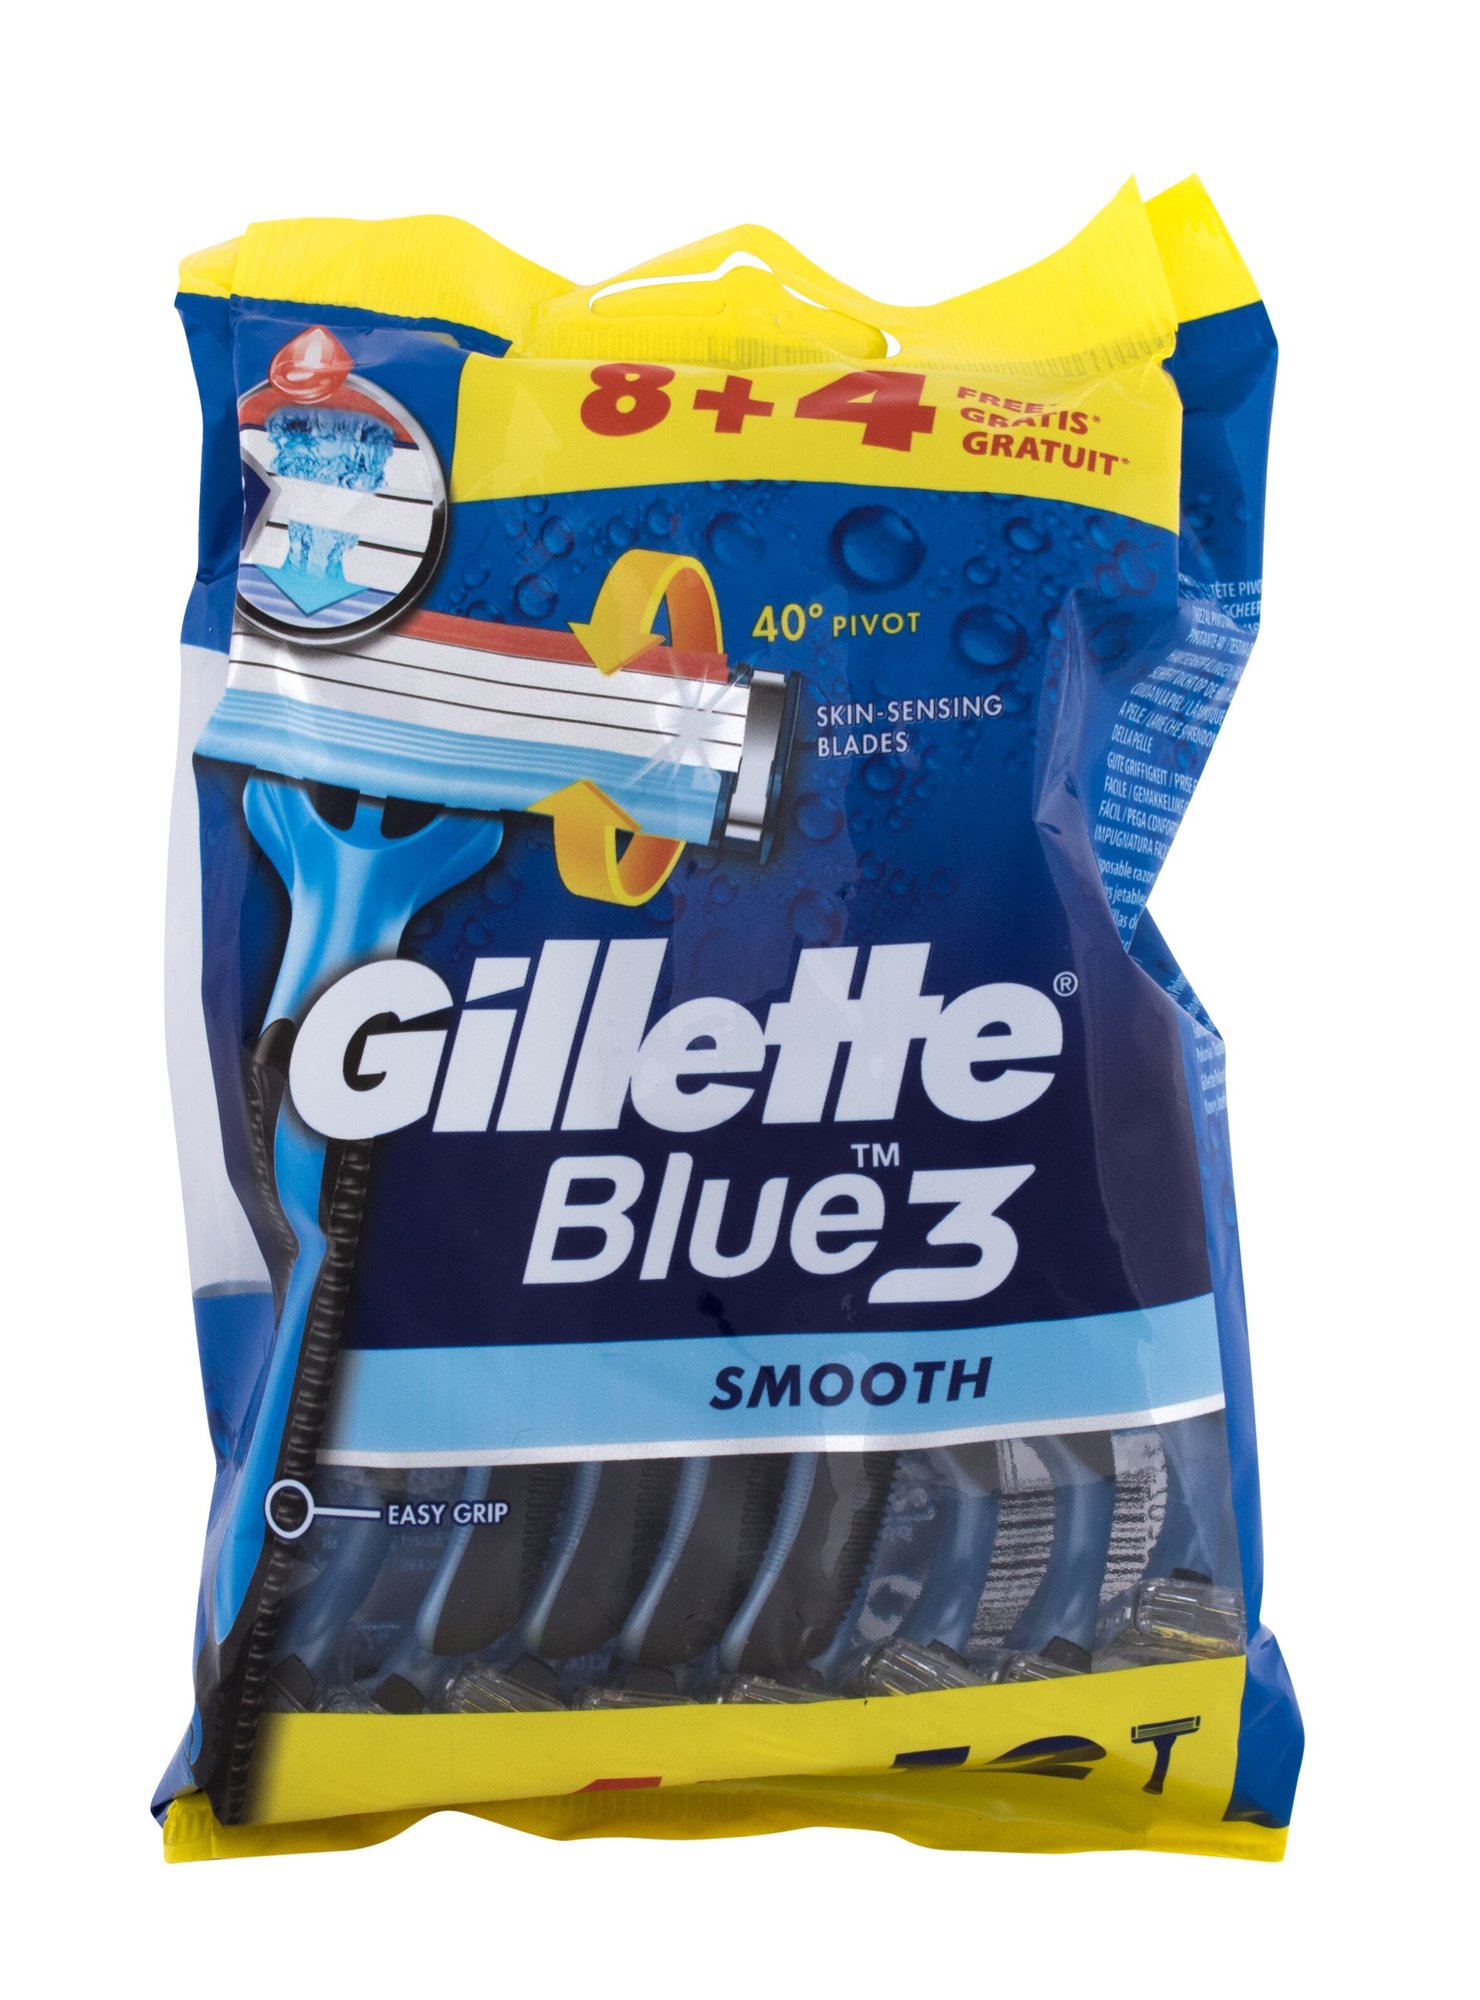 Gillette Blue3 Smooth 1vnt skustuvas